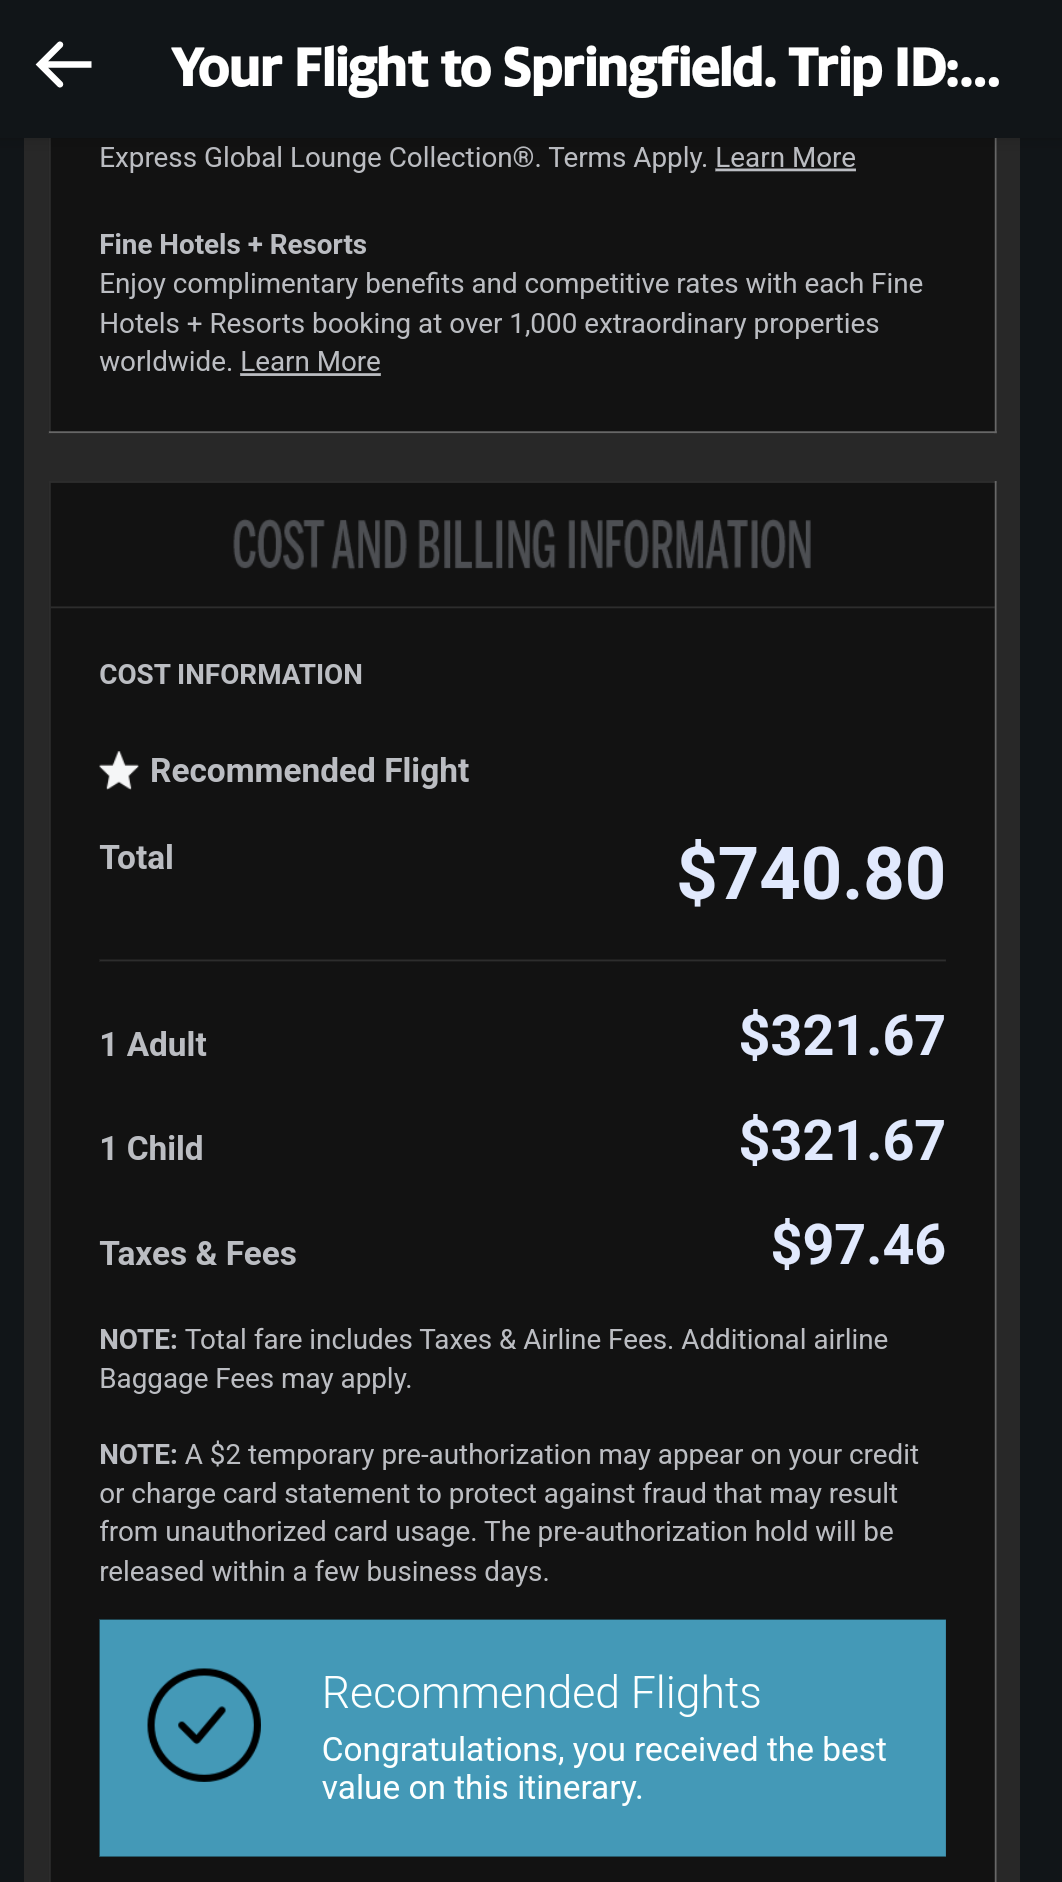 IAH to ATL Delta flight review original pricing